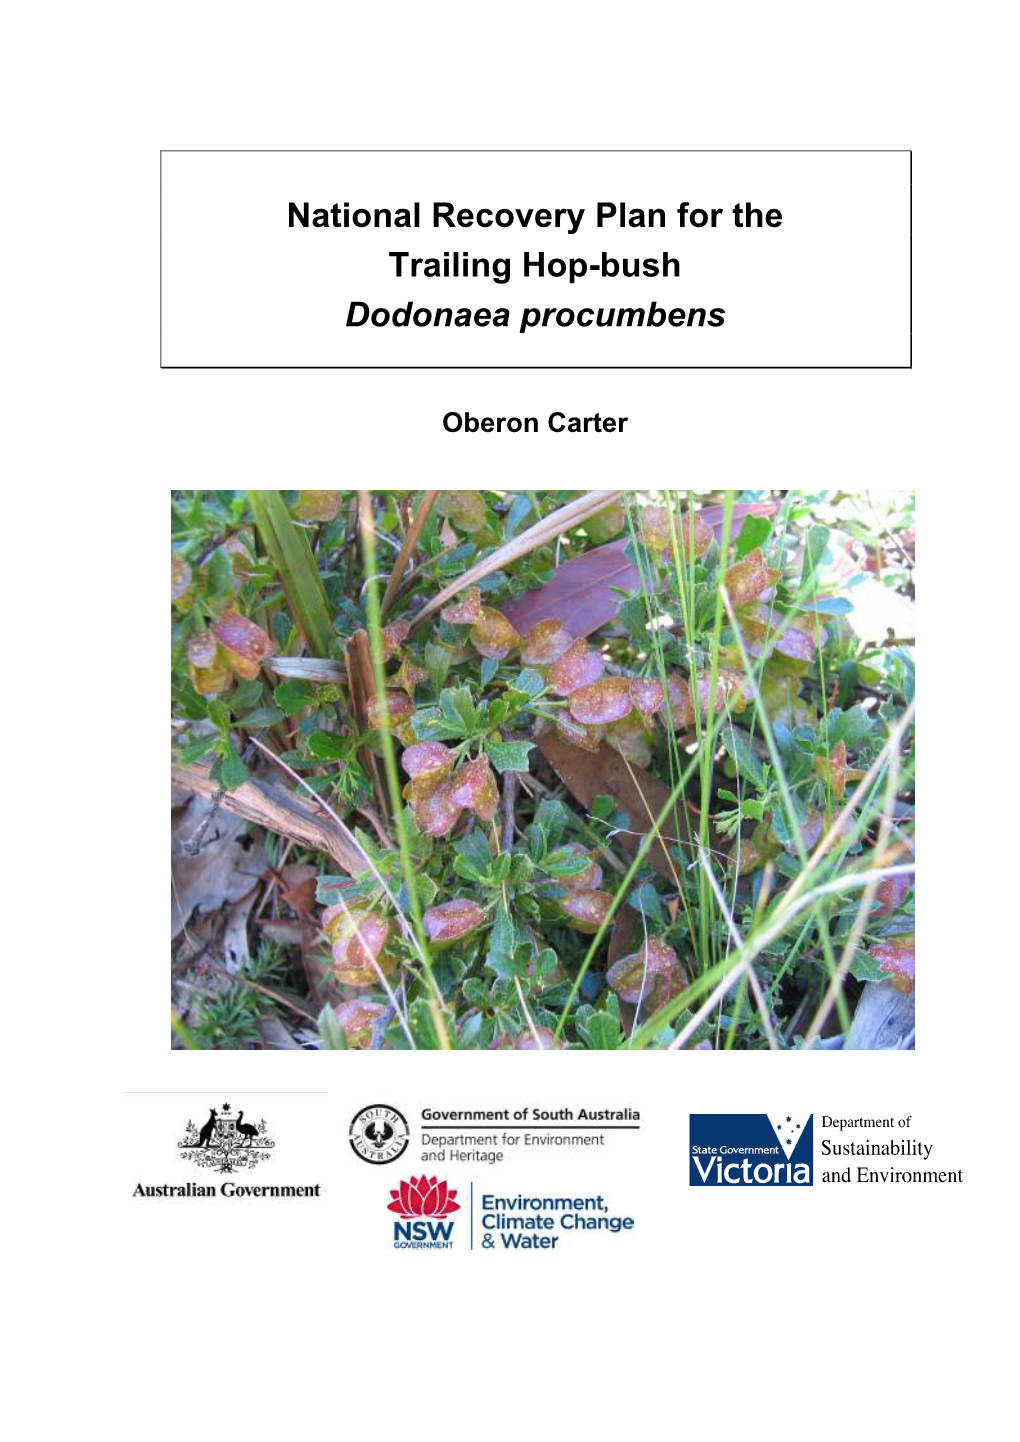 National Recovery Plan for the Trailing Hop-Bush (Dodonaea Procumbens)